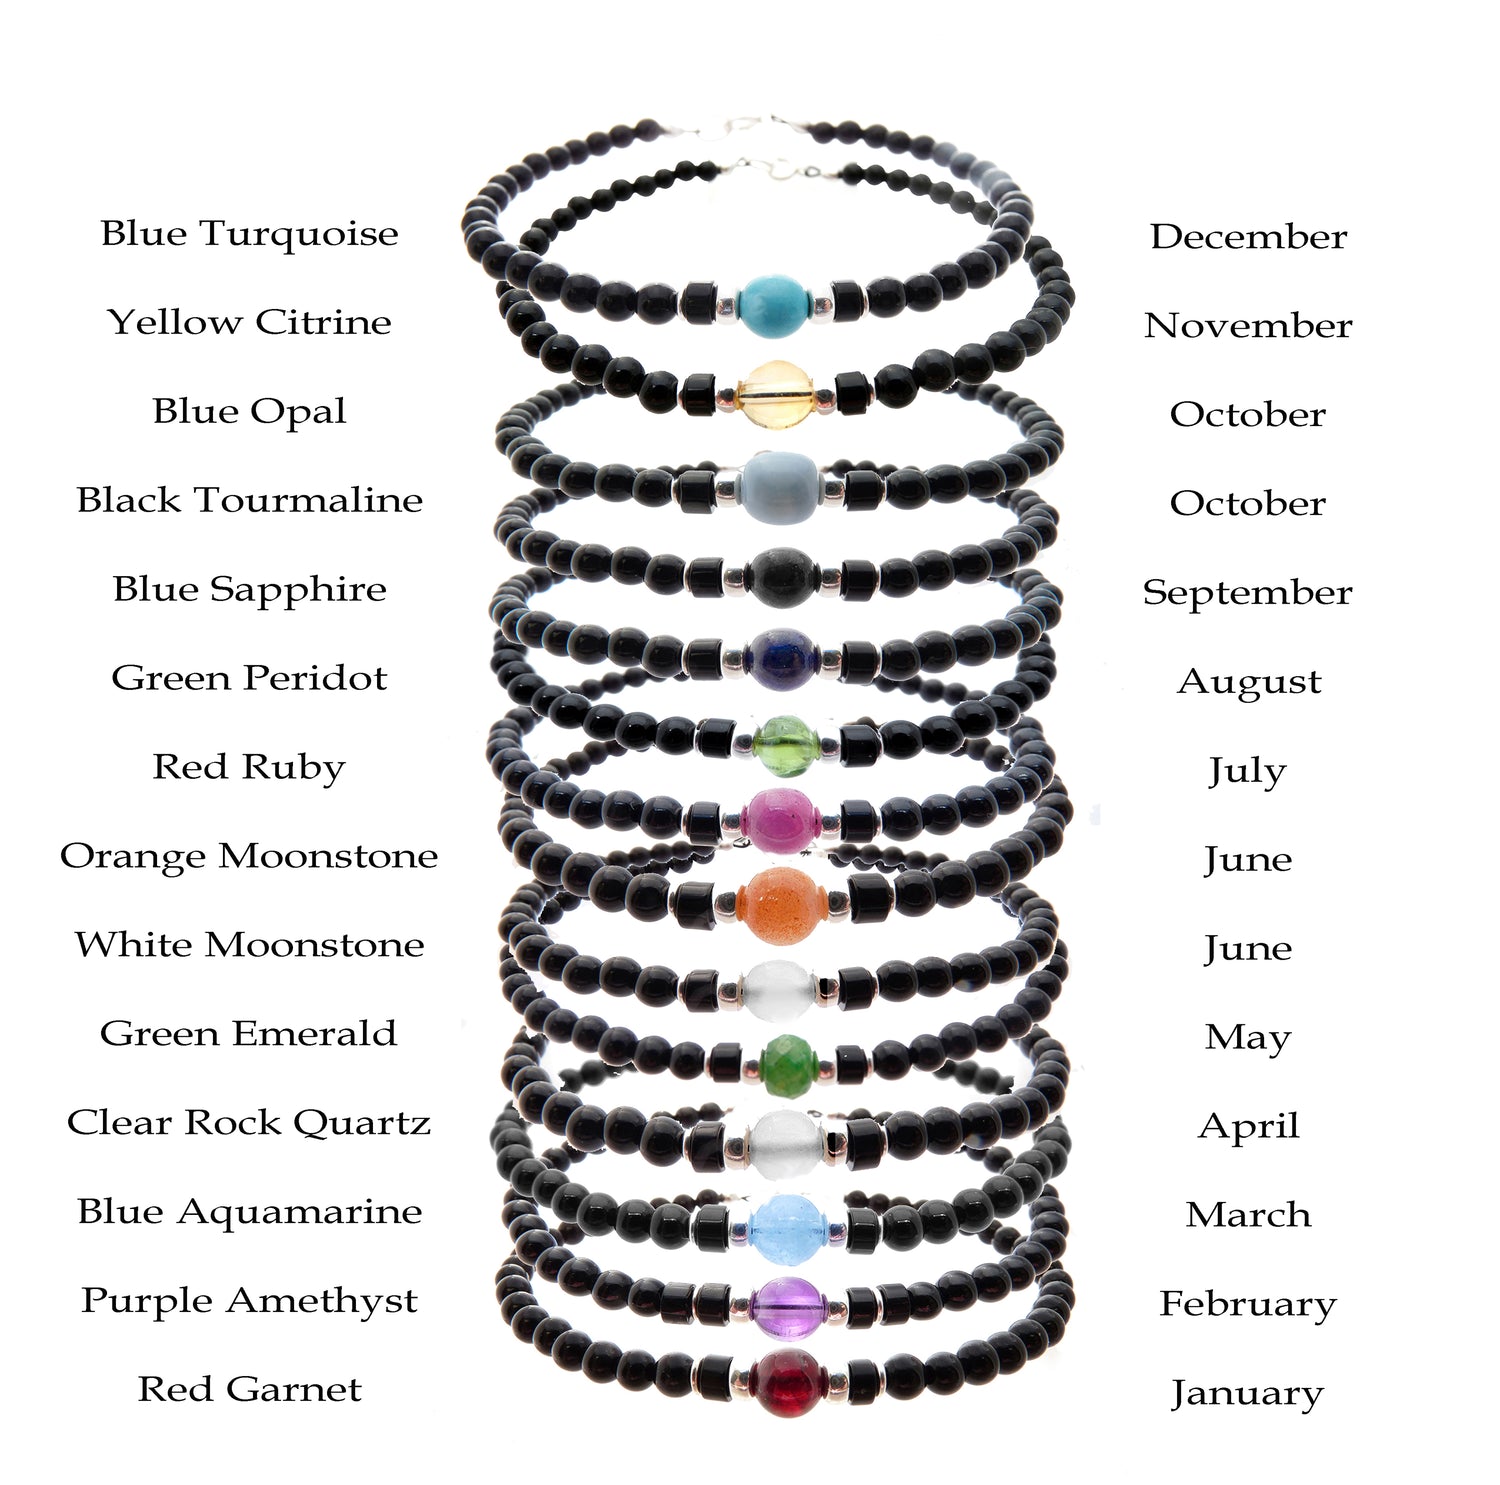 Men's Onyx and Amethyst Double Wrap Bracelet